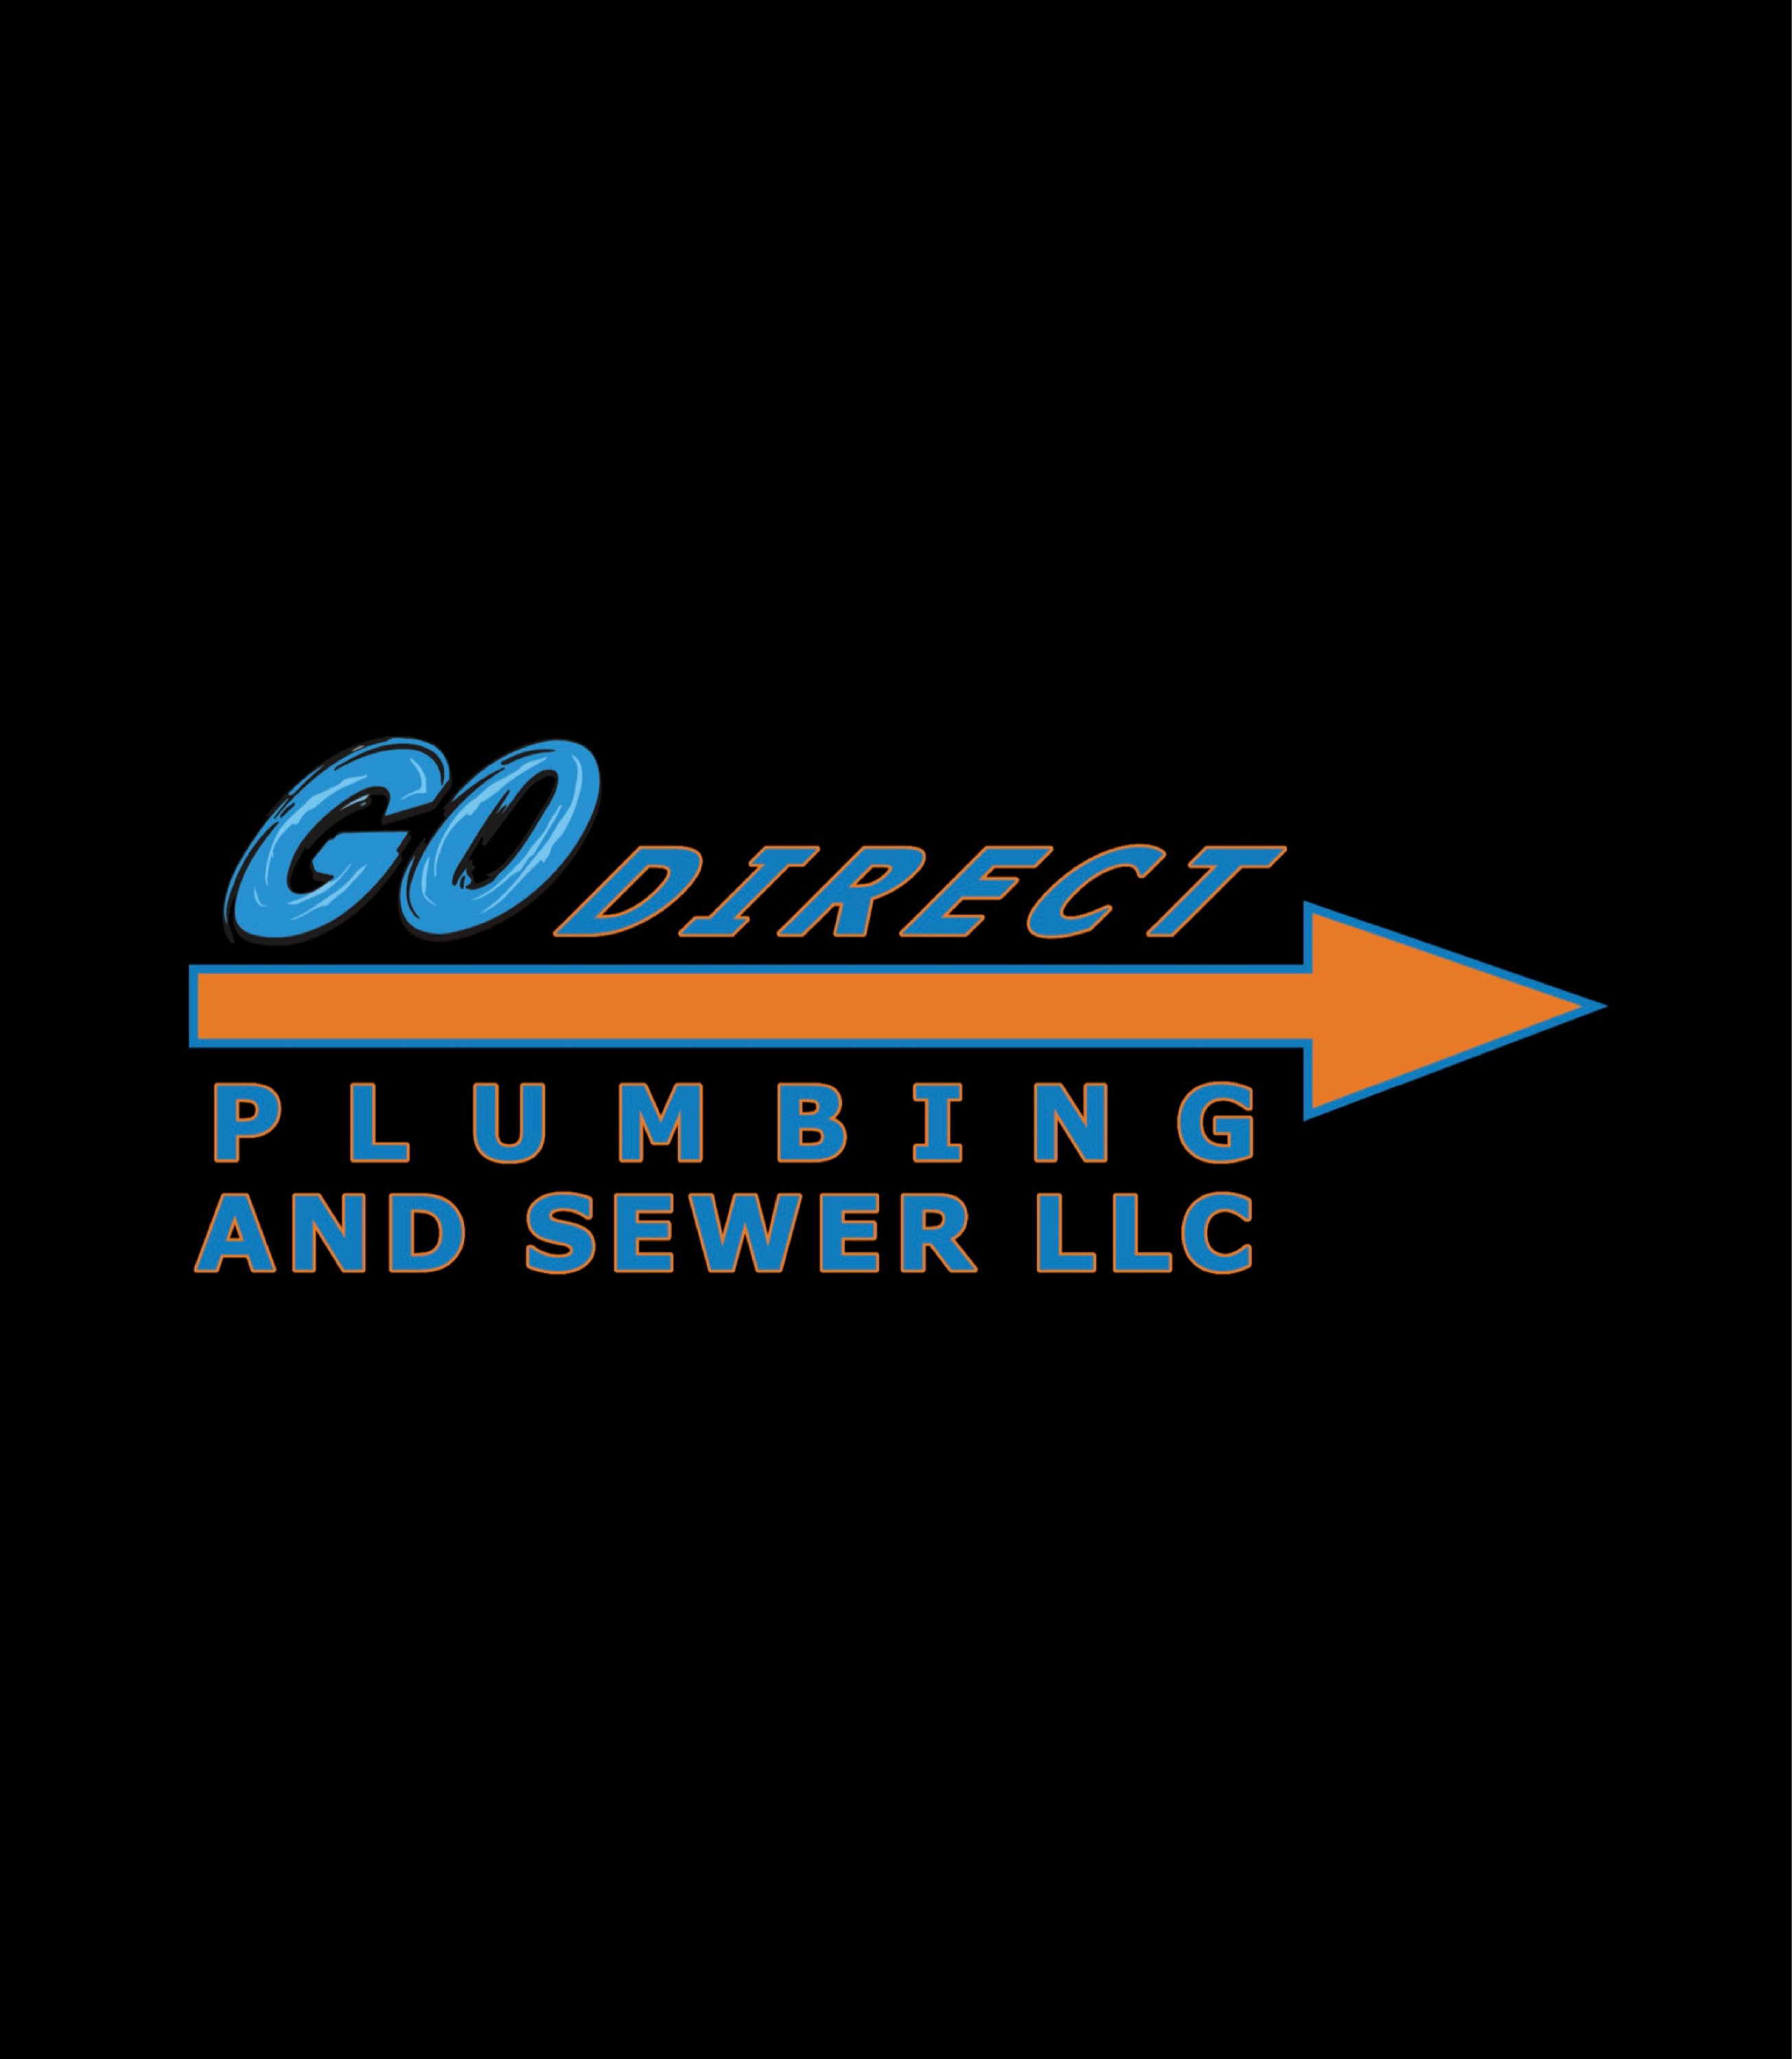 Go Direct Plumbing And Sewer LLC Logo